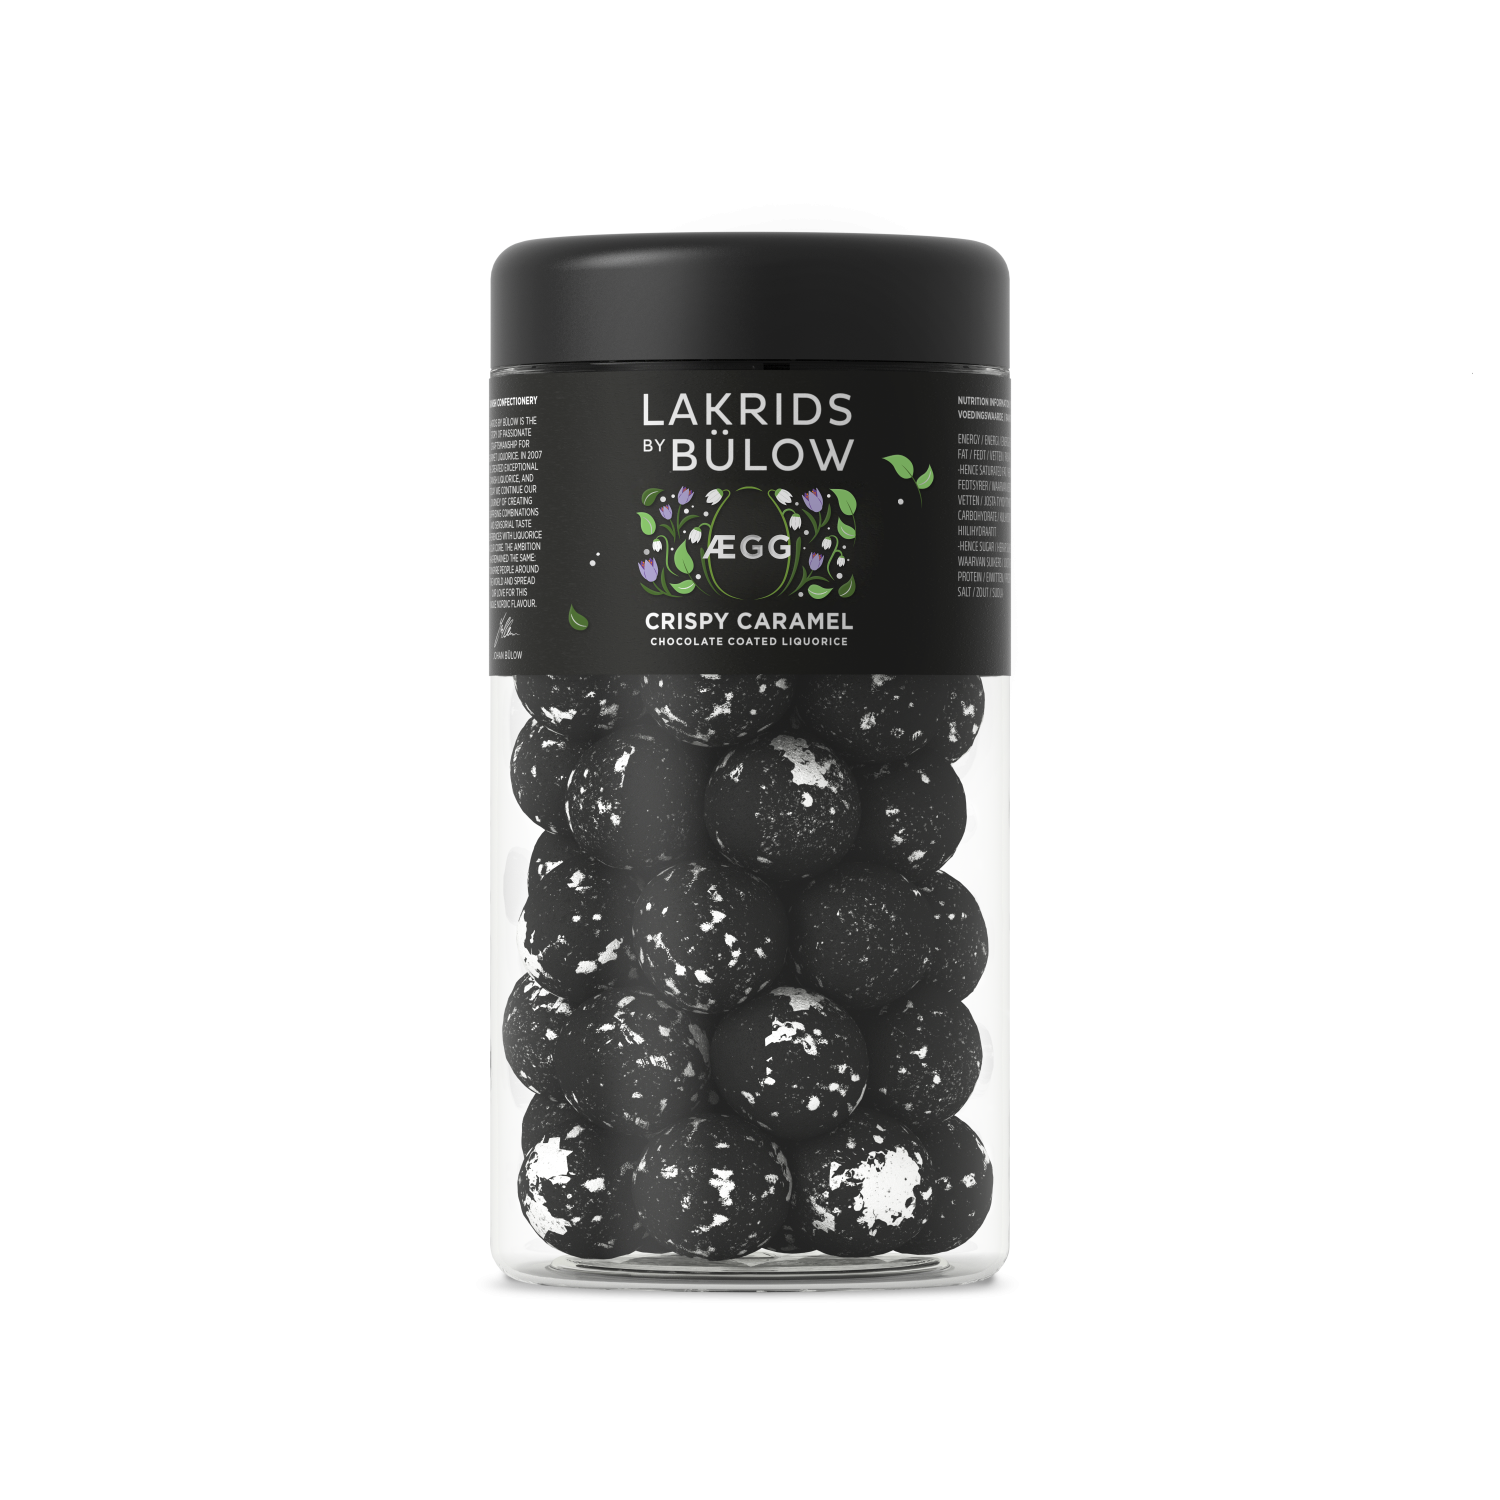 Lakrids by Bylow crispy caramel large